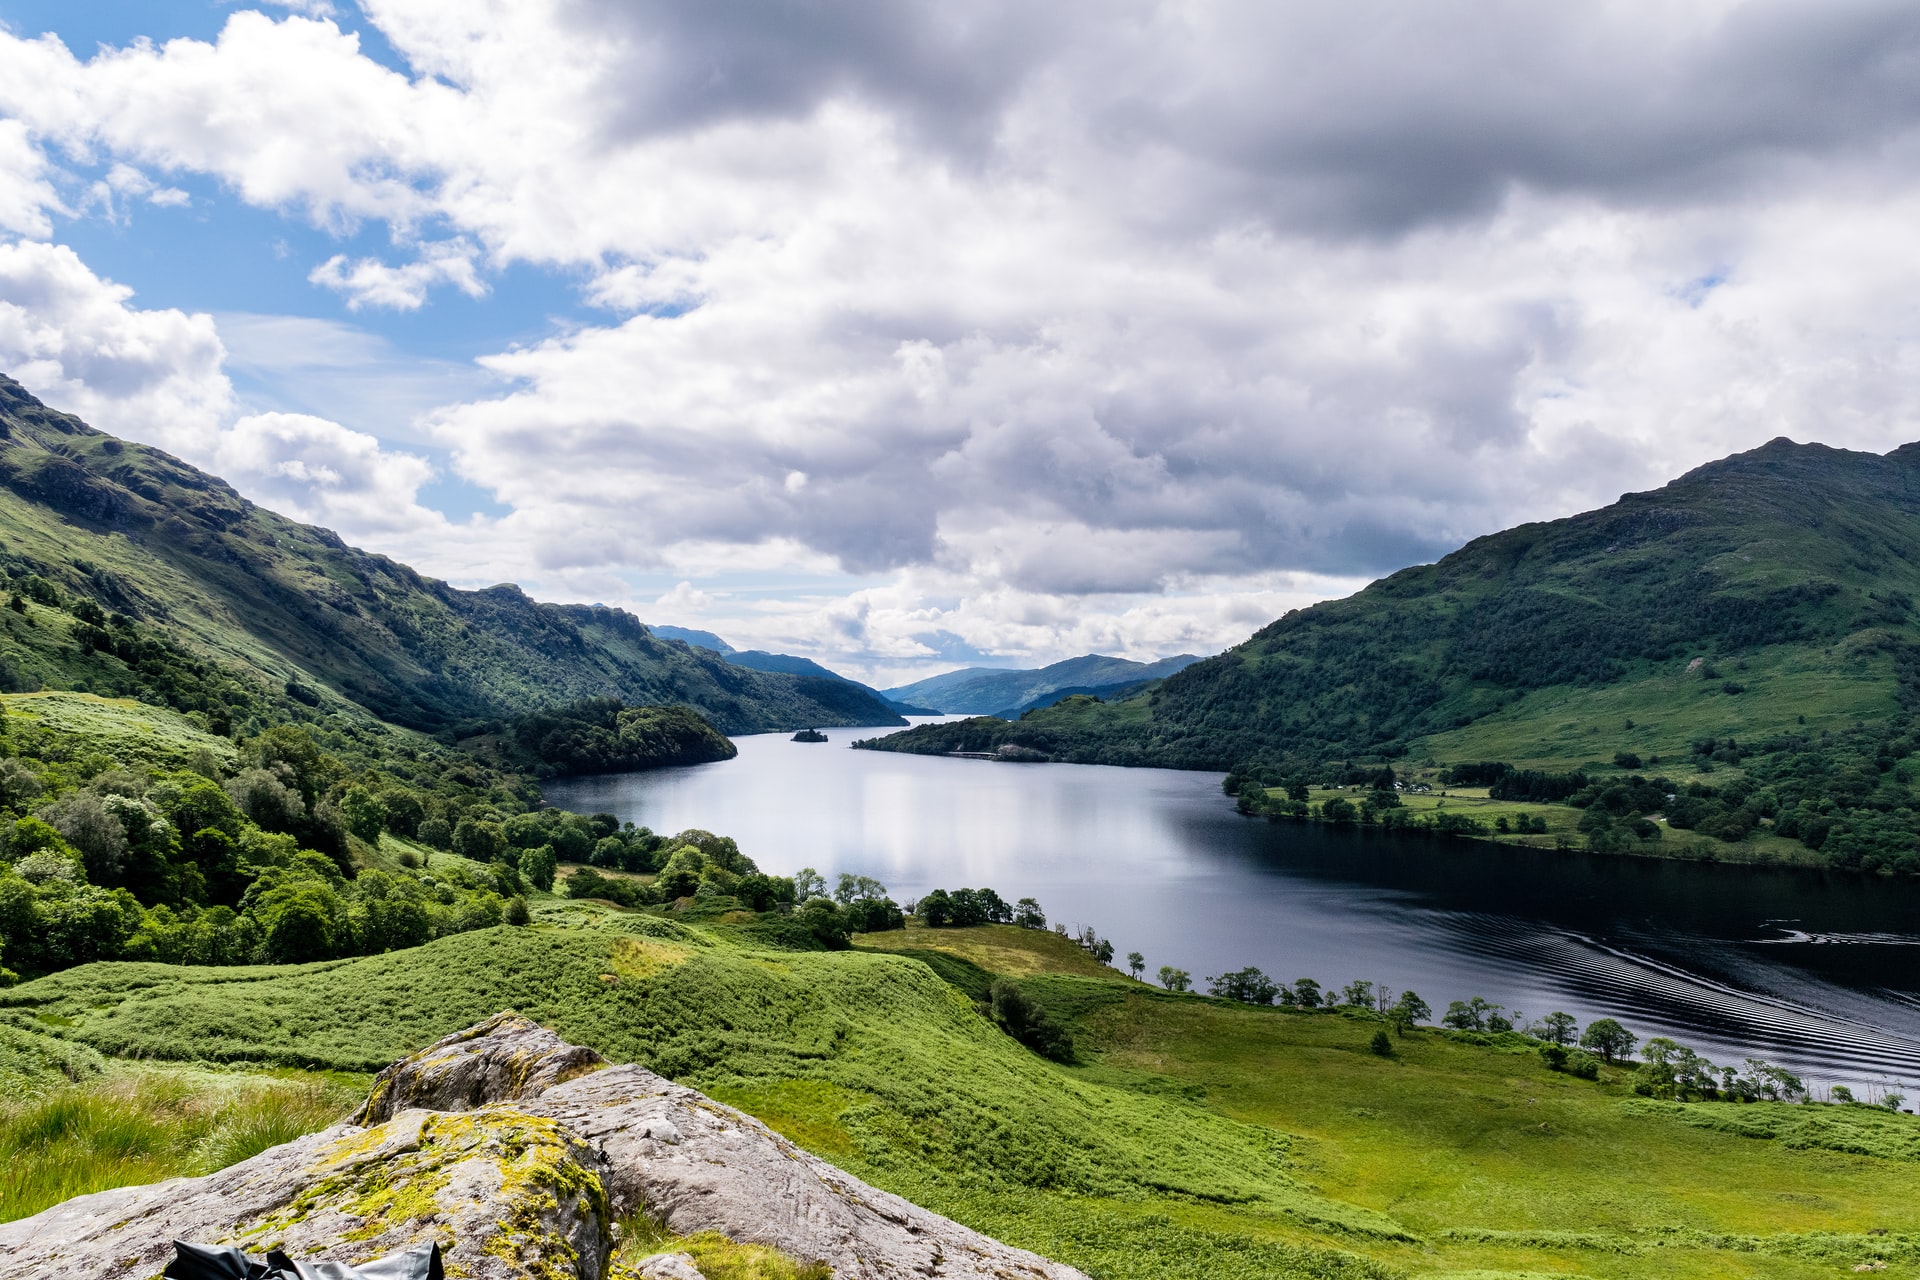 green-grass-field-near-lake-amid-mountains-under-cloudy-sky-loch-lomond-scenic-drives-in-scotland